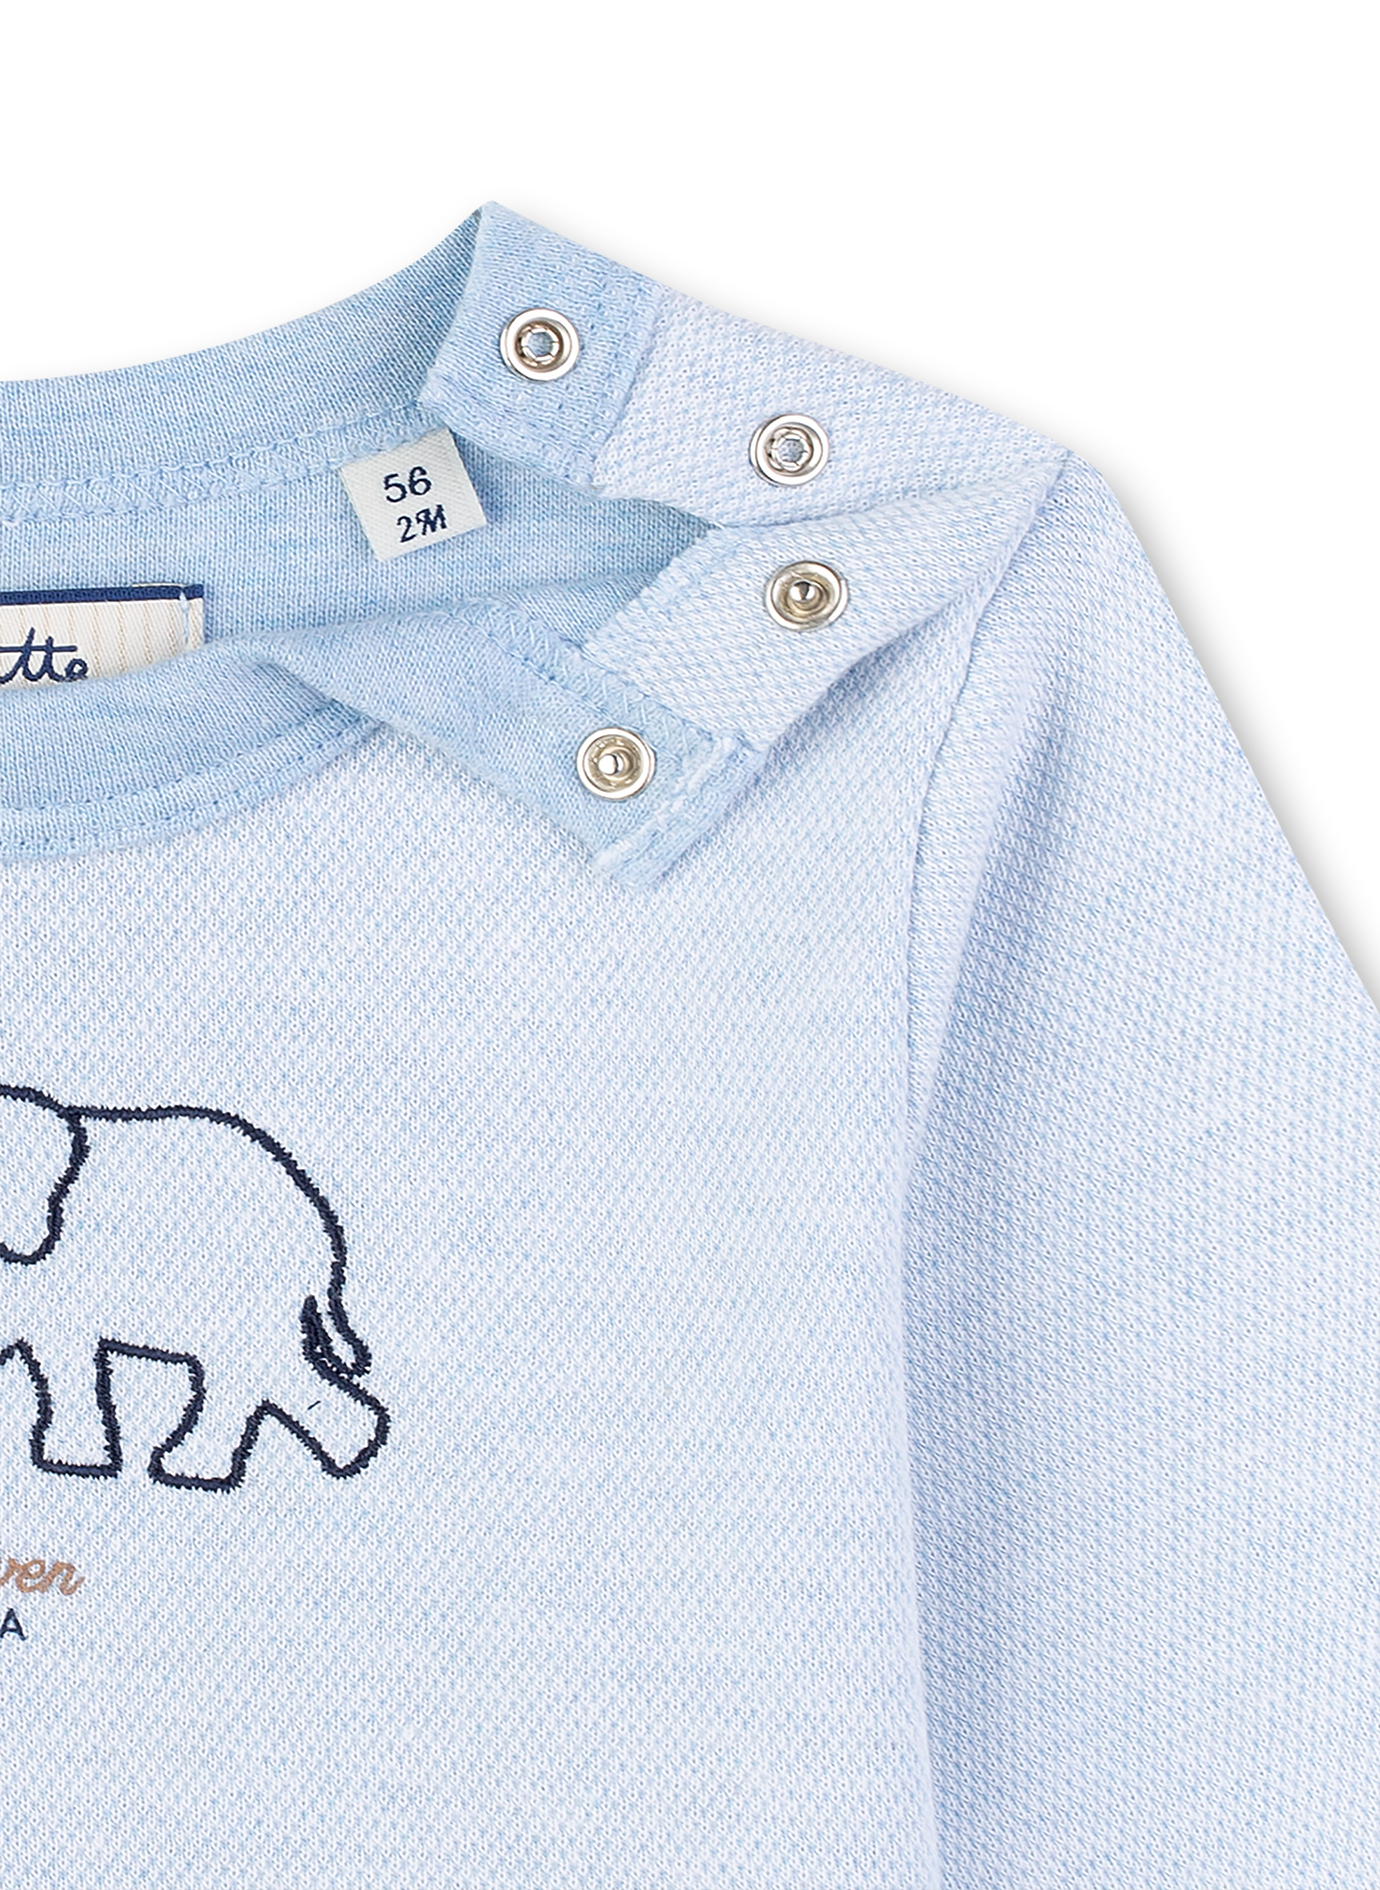 Jungen-Sweatshirt Blau Smart Elephant